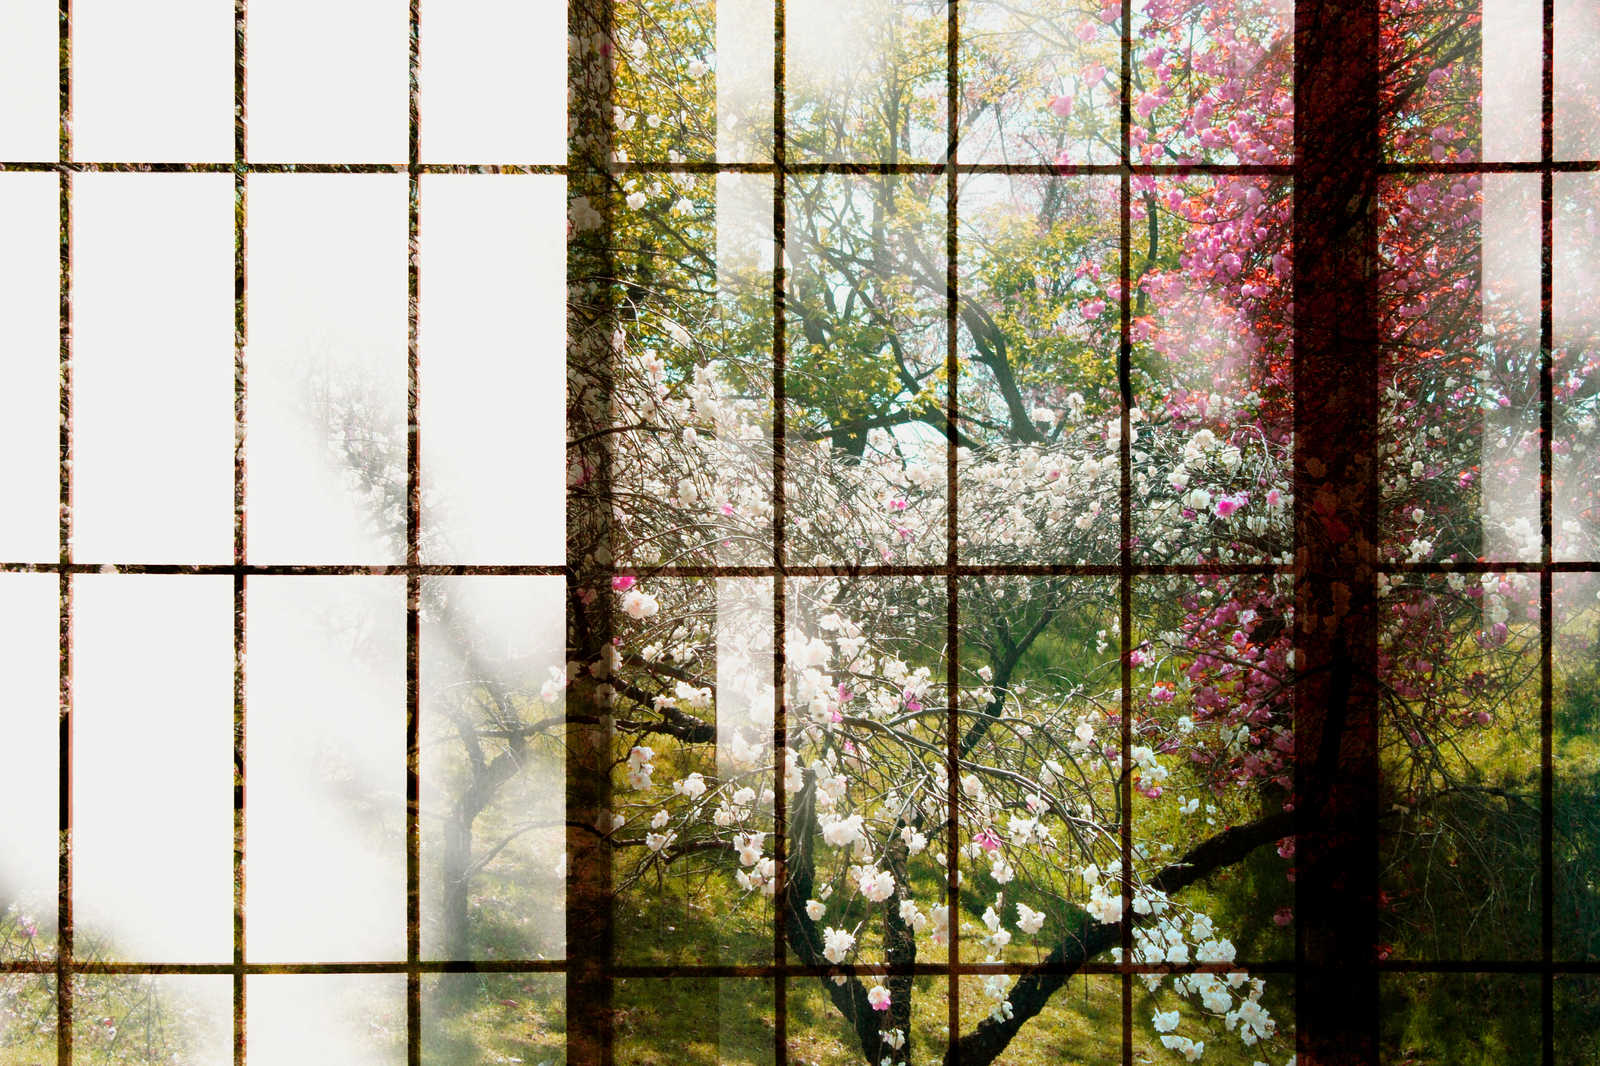             Orchard 1 - Leinwandbild, Fenster mit Garten Ausblick – 1,20 m x 0,80 m
        